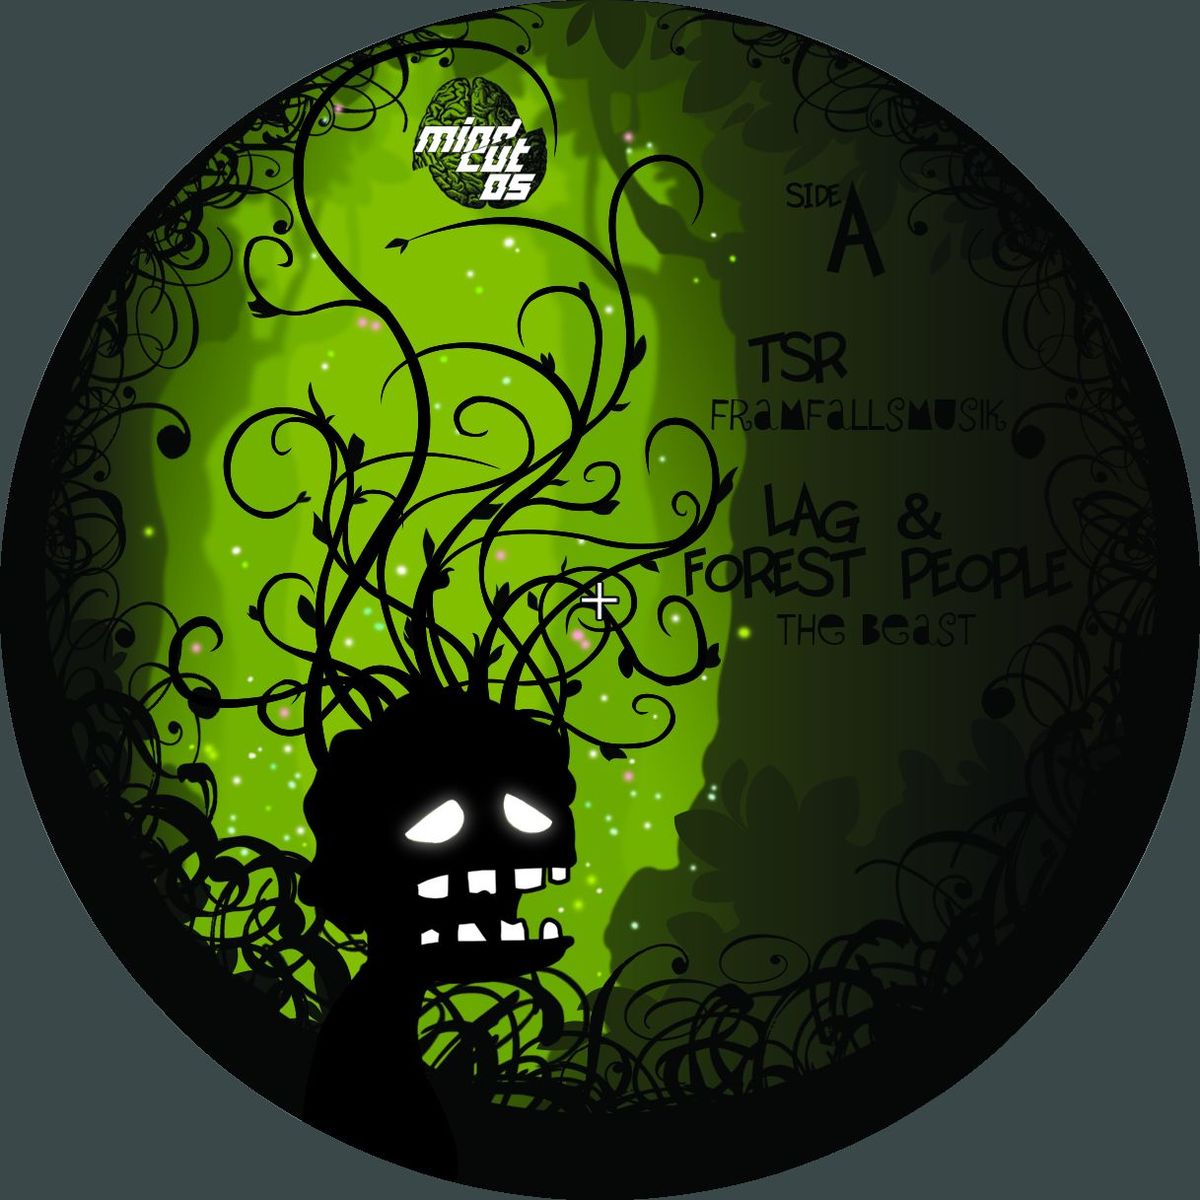 image cover: VA - Beanstalk Creeper EP [Mindcut05]